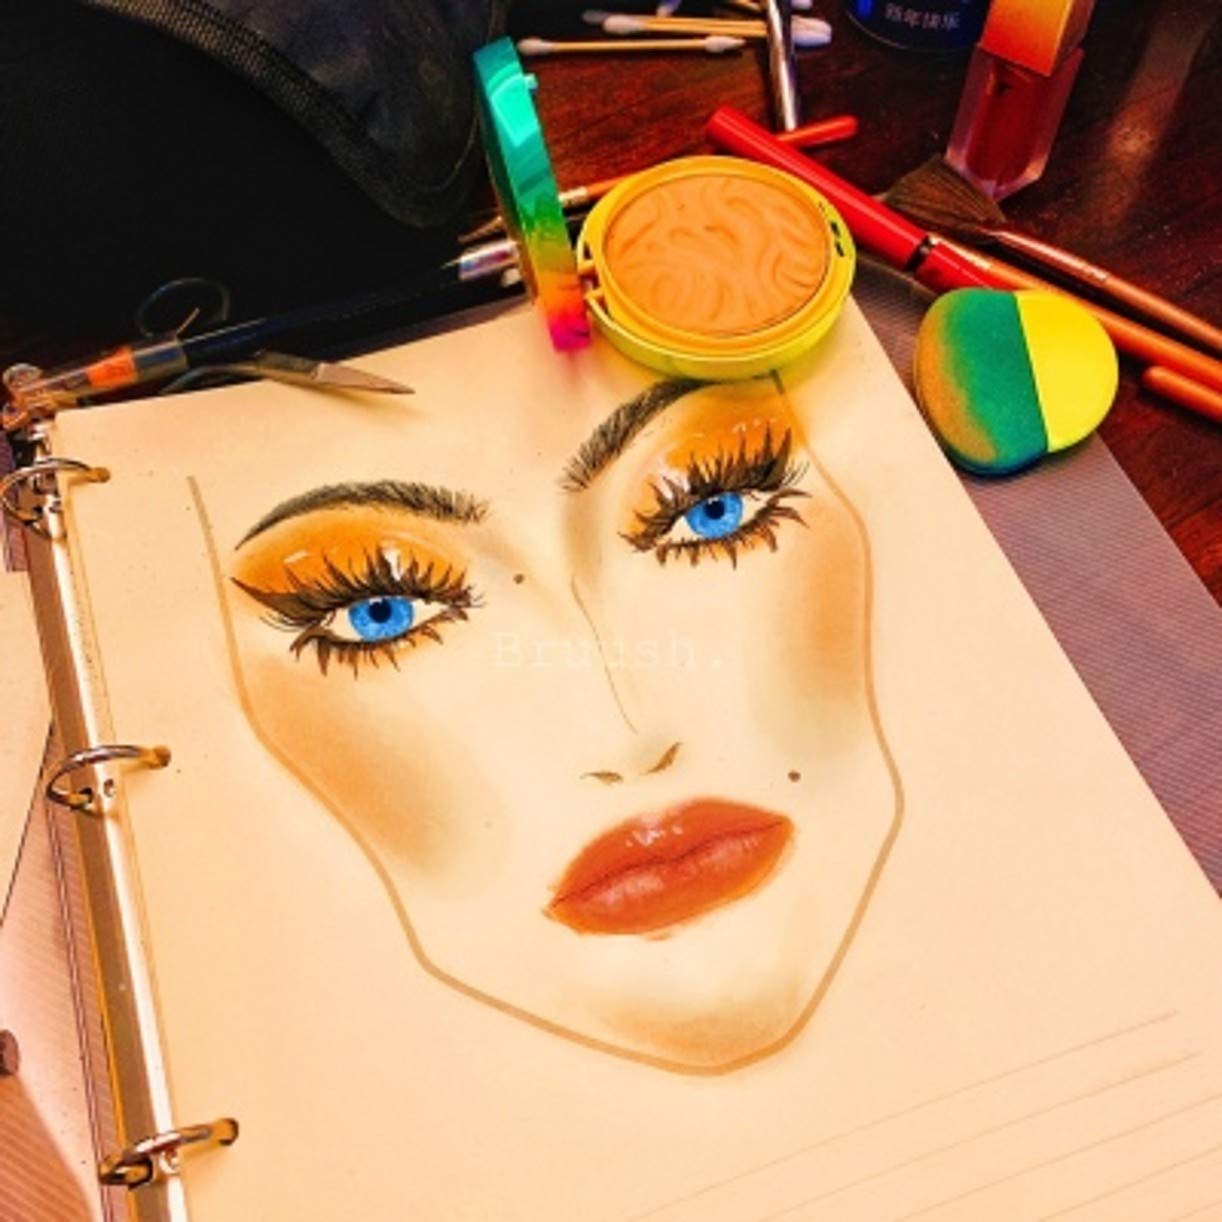 WellieSTR A4 (European Face Chart) Makeup Artist Exercise Book foor Students and Hobbyists,Makeup Notebook Professional Makeup Artist Practice Template Makeup Drawing Book